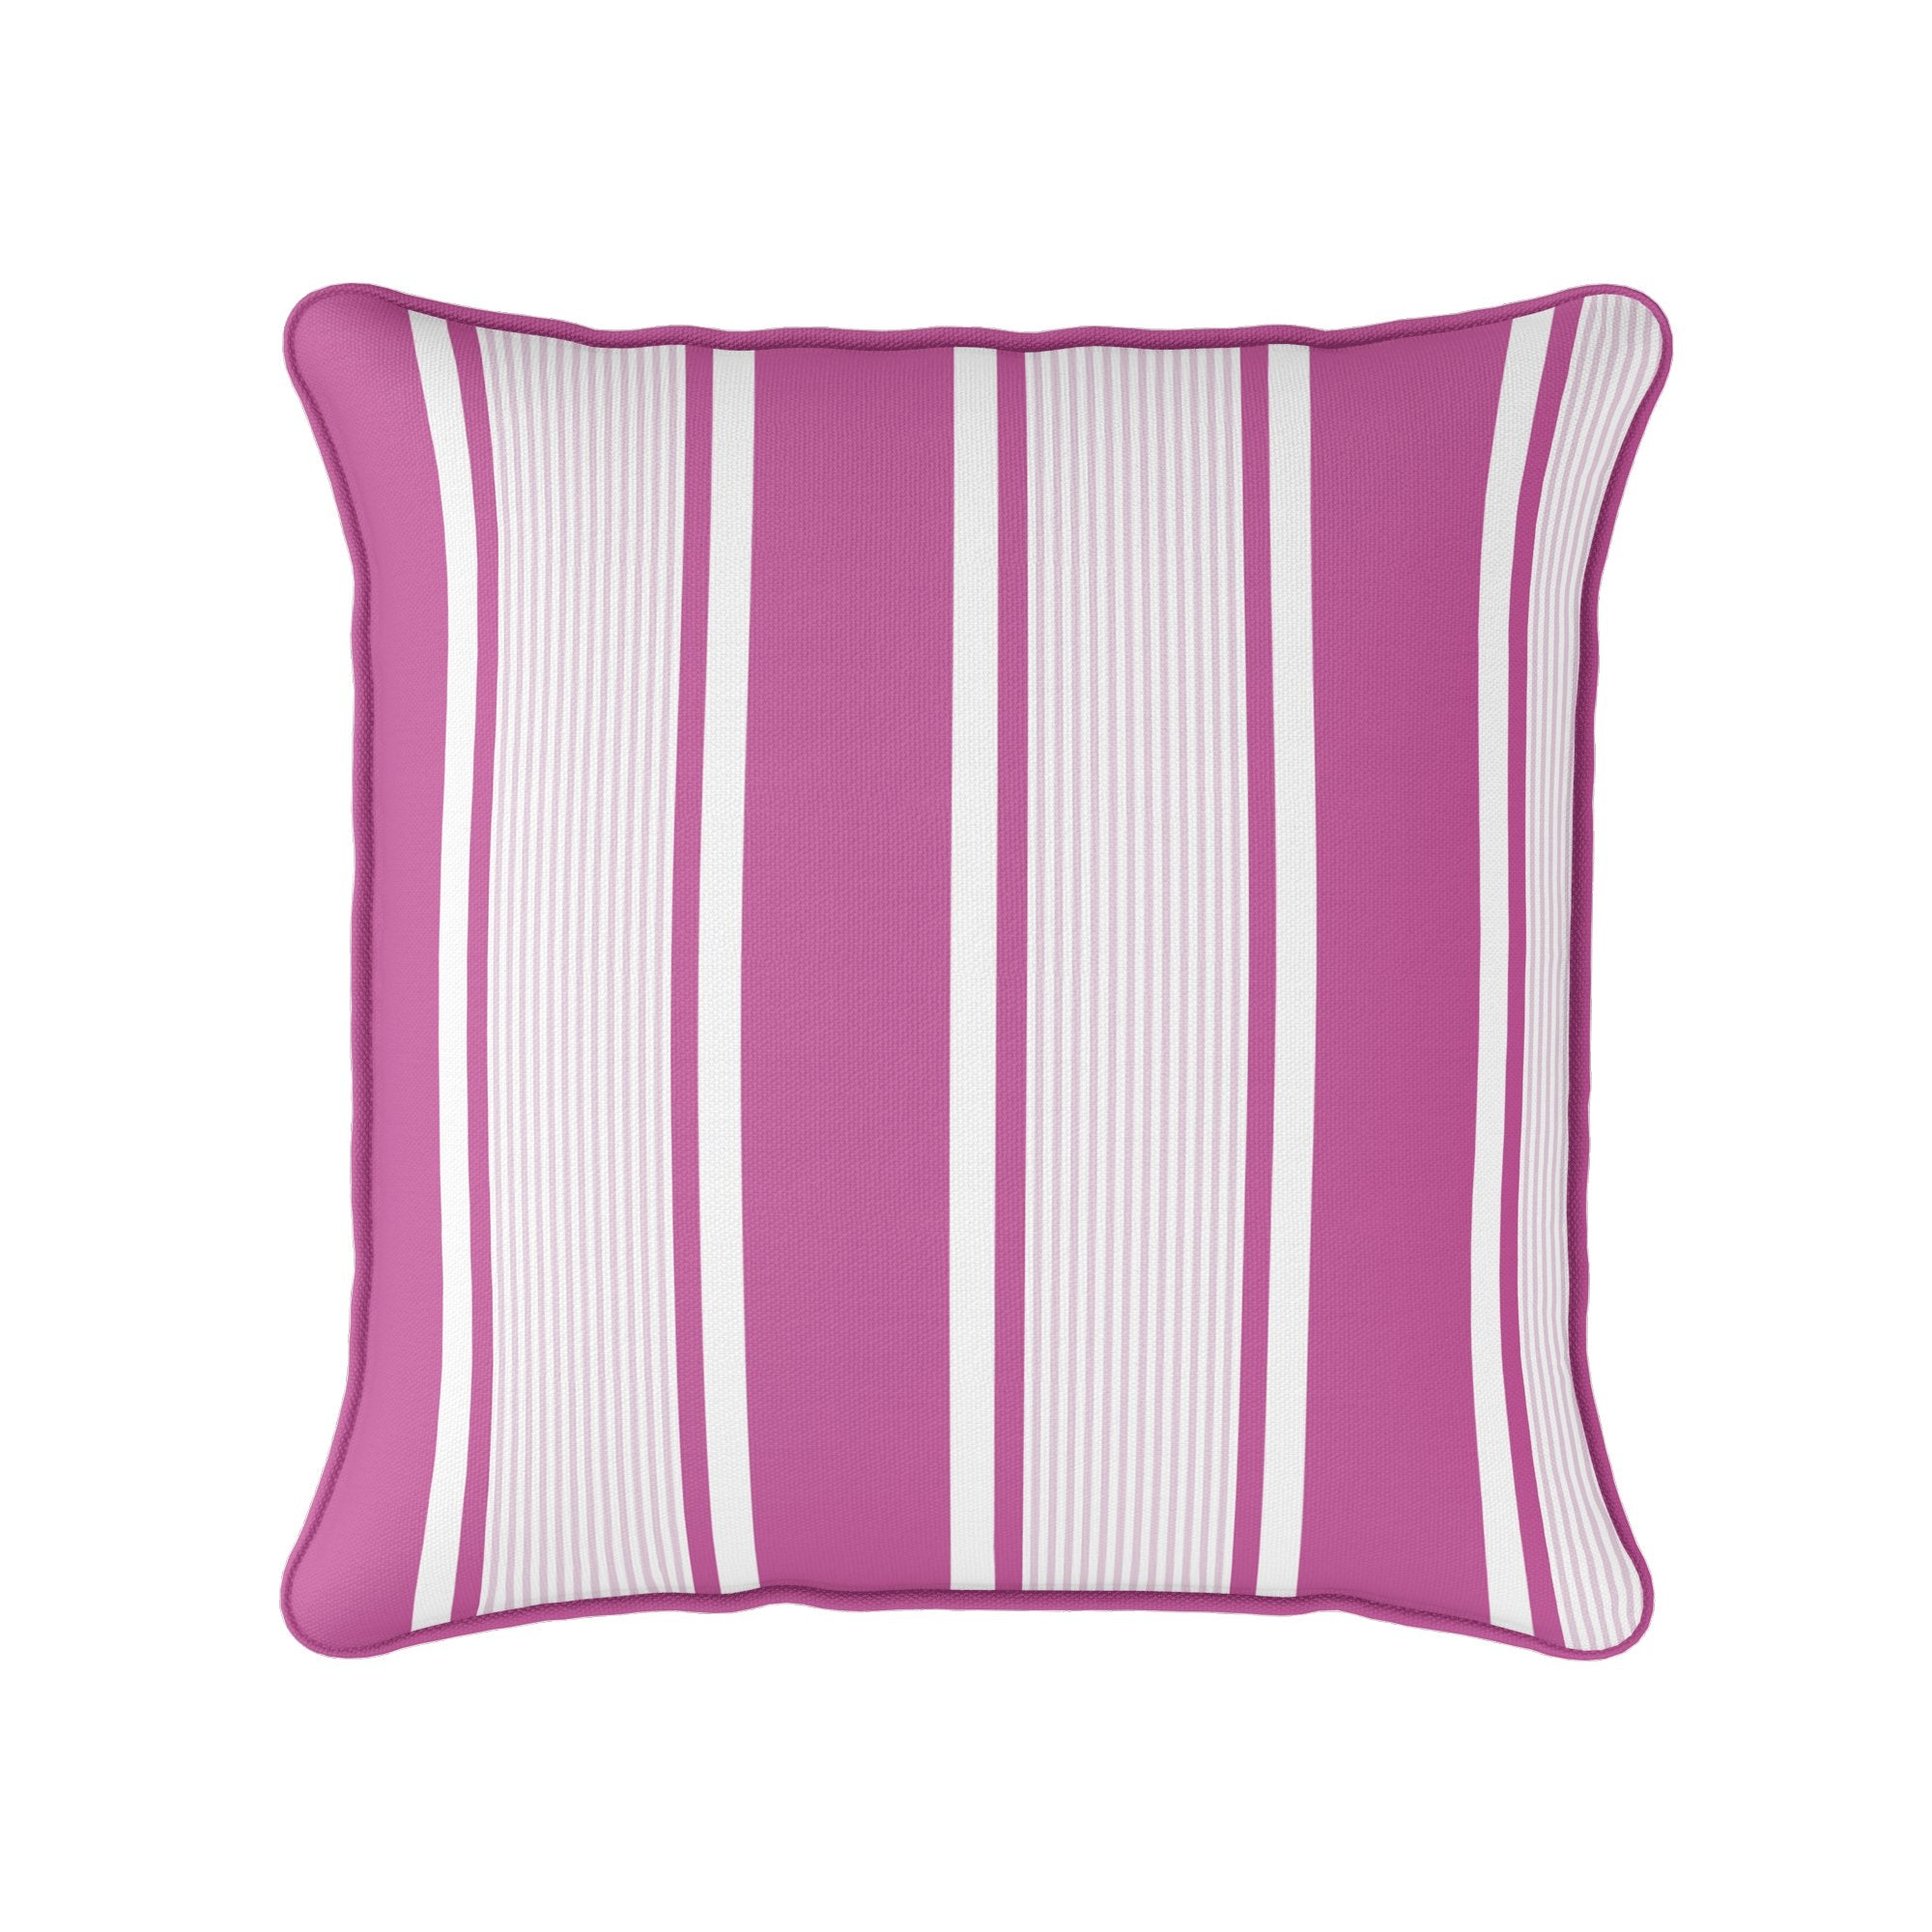 Deckchair Multi Stripe Cushion- Pinks and Greens - Hydrangea Lane Home